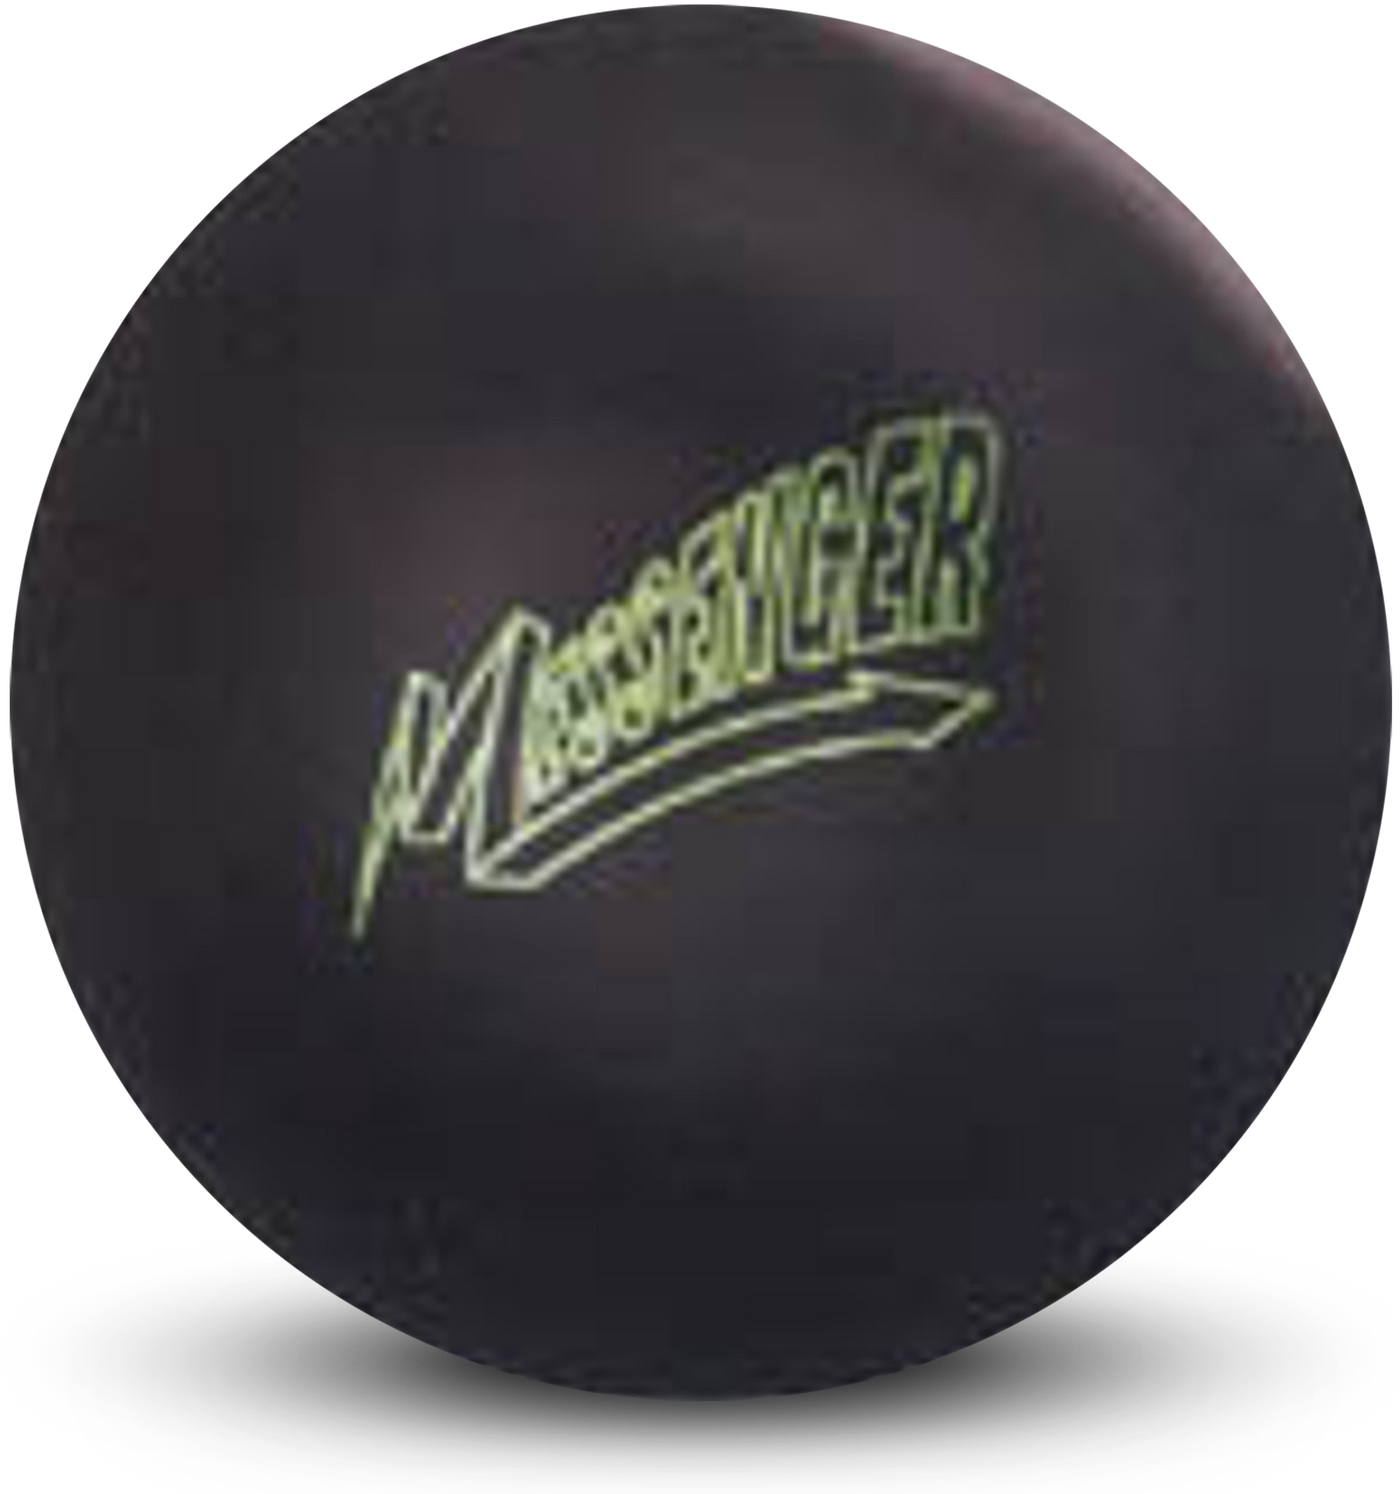 Messenger Black Bowling Ball